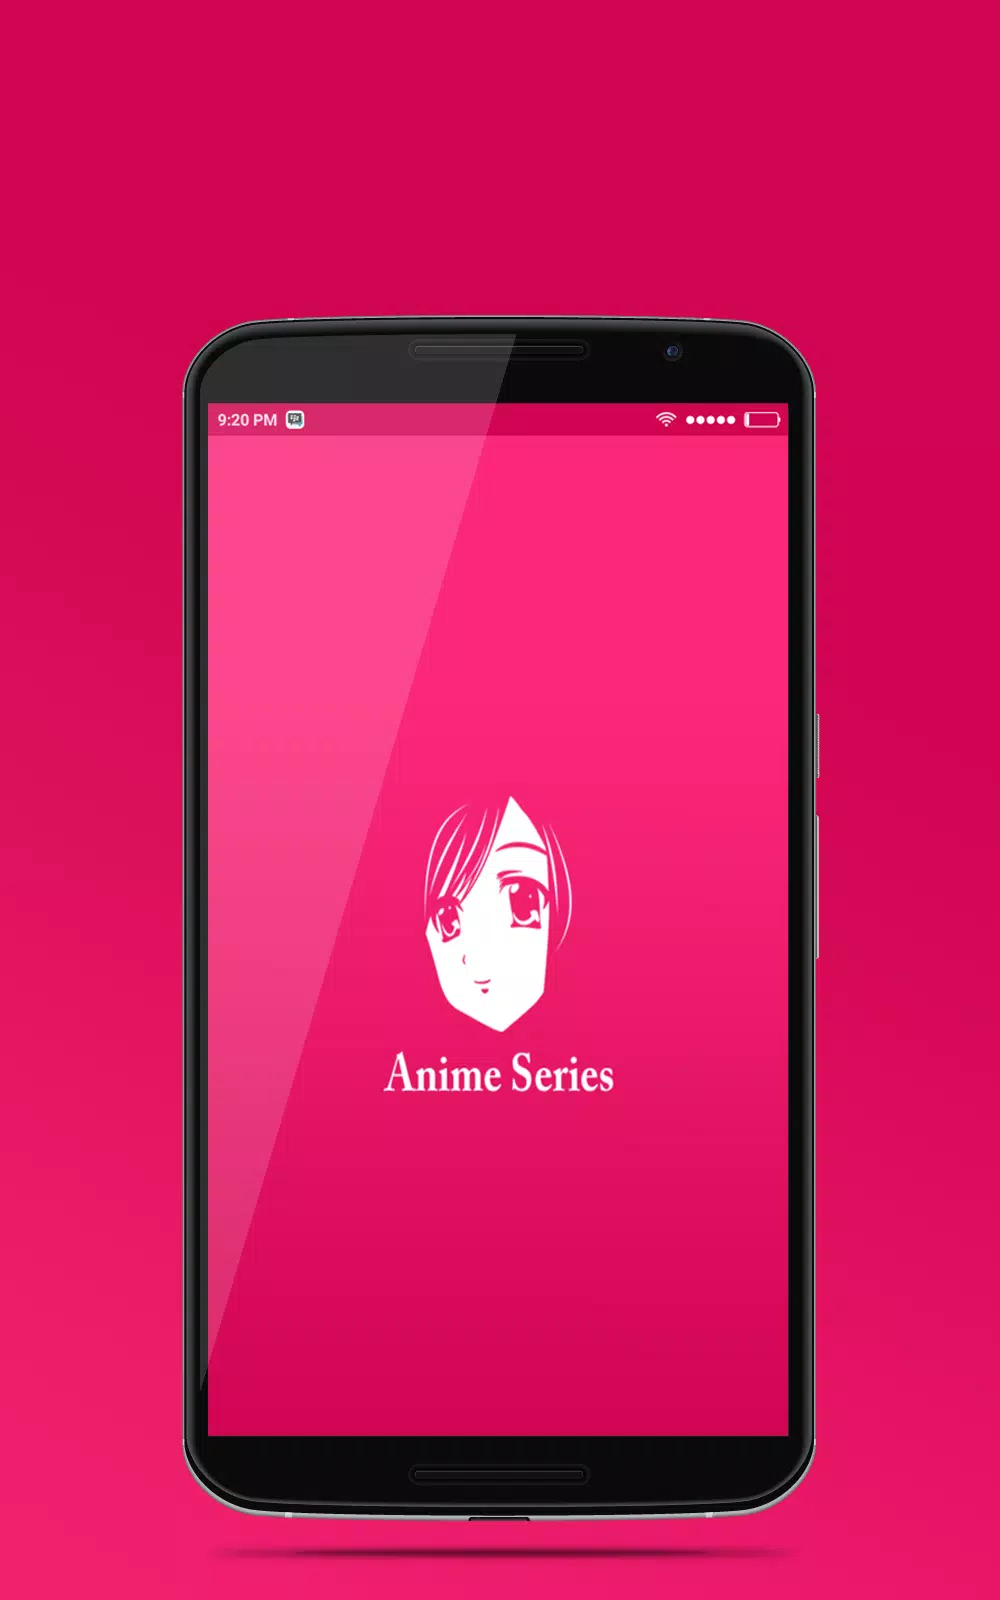 Samehadaku - Streaming dan Download Anime Sub Indo APK for Android -  Download